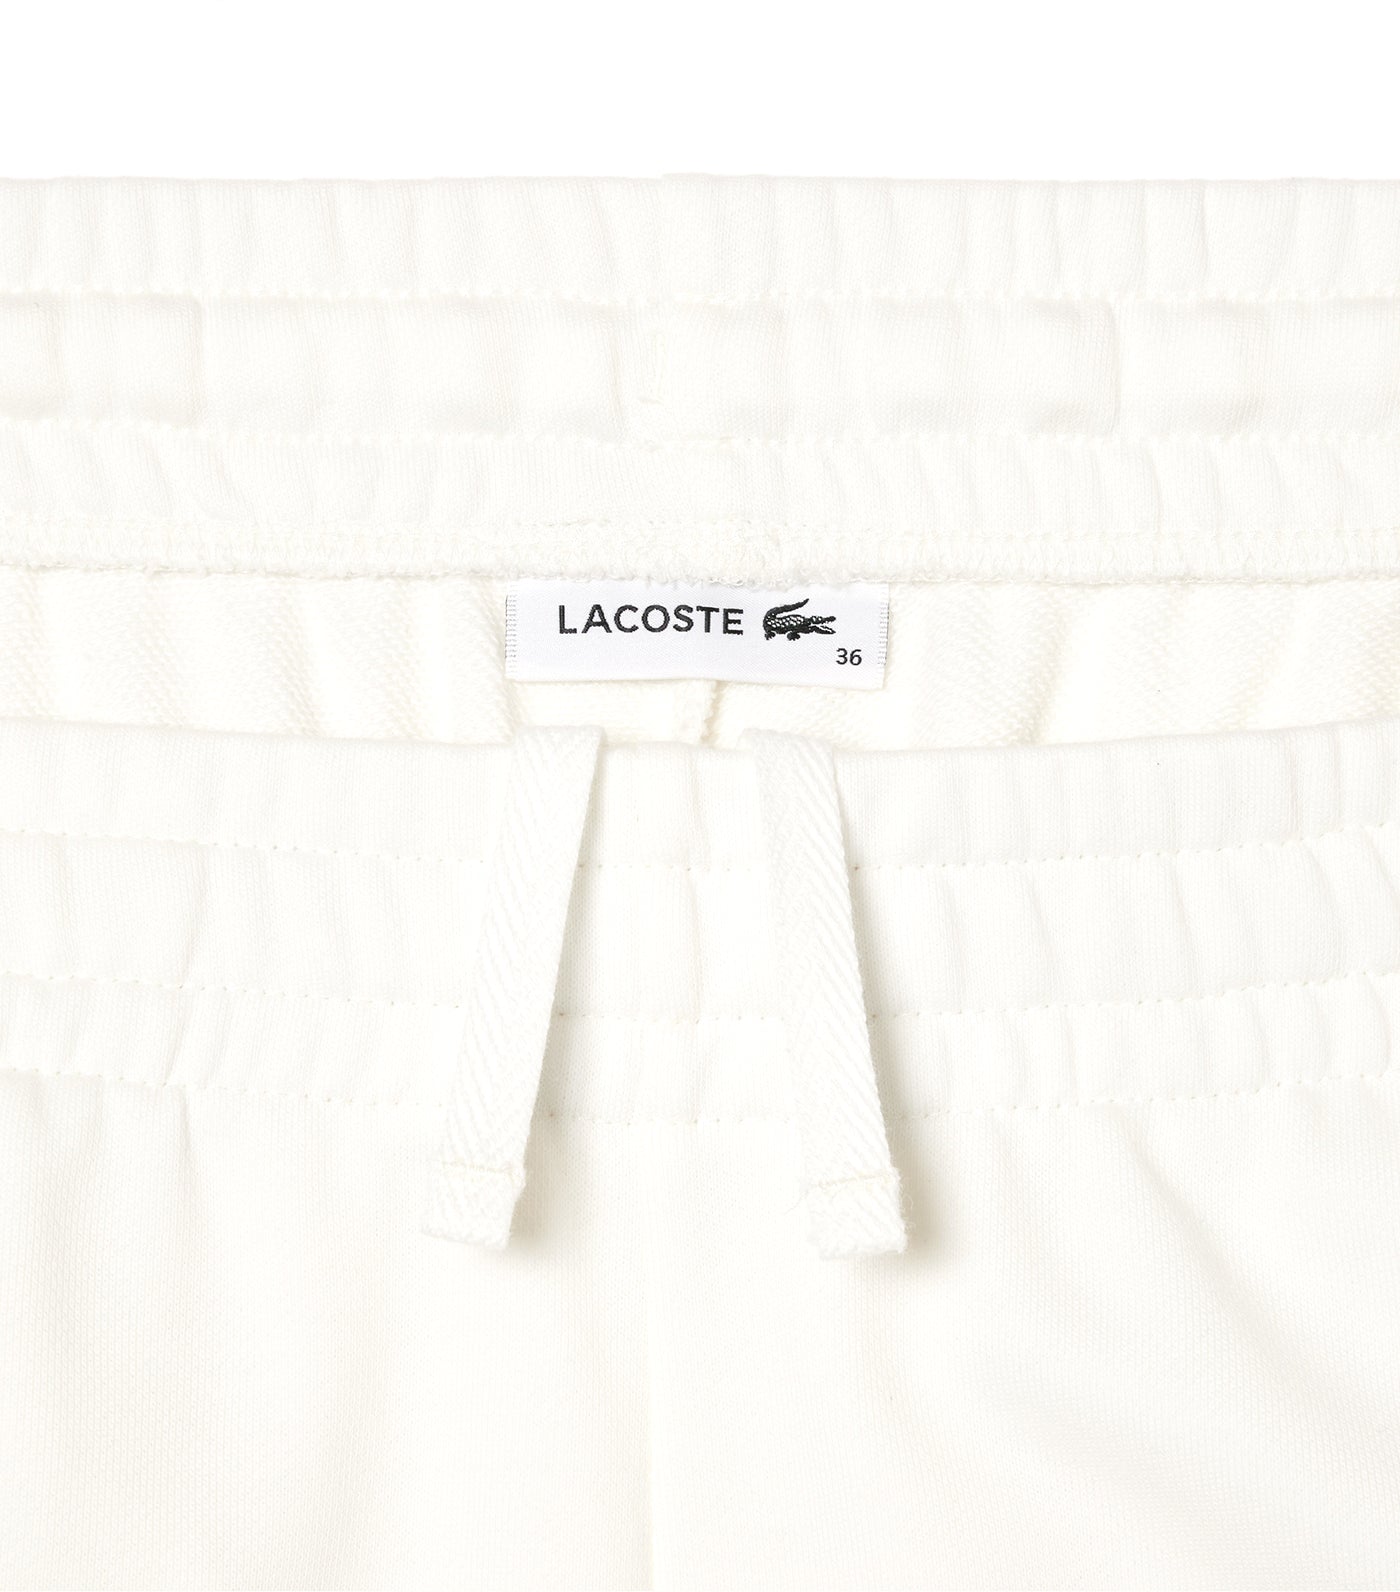 Lacoste Printed Jogger Track Pants Flour